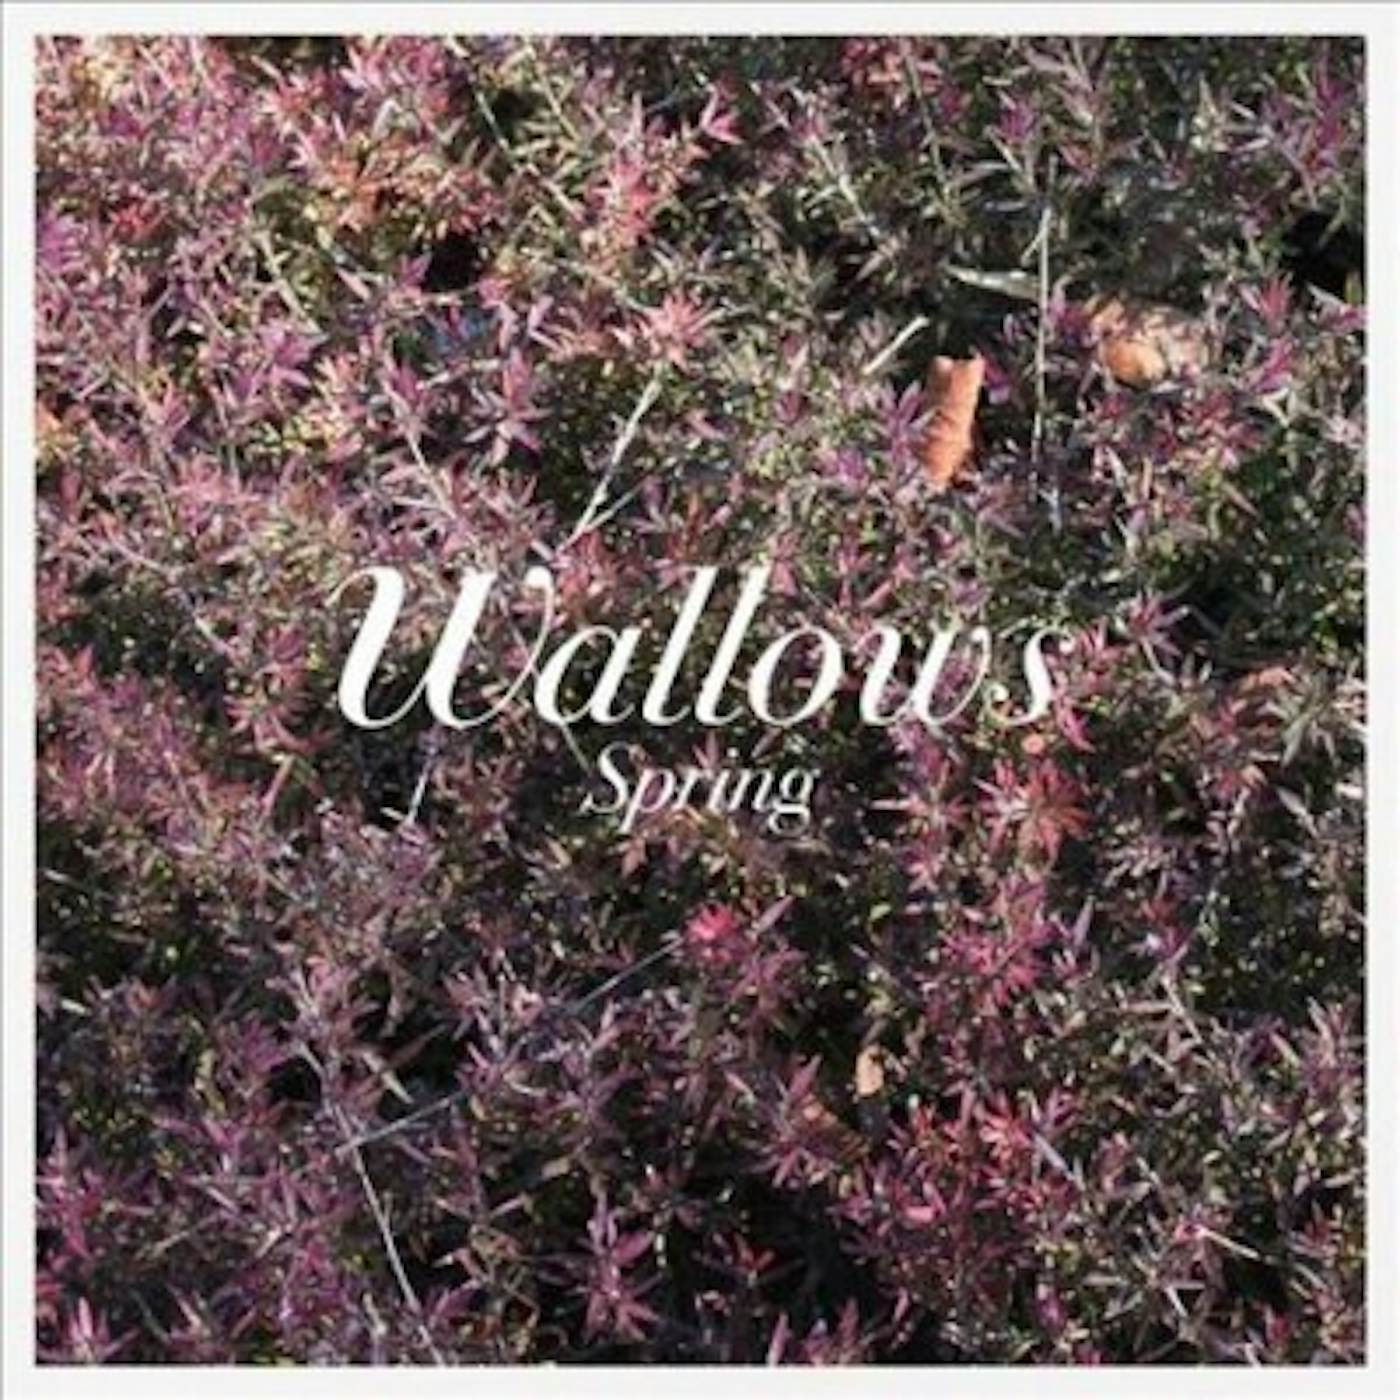 Wallows Spring EP (Pink & Green) Vinyl Record